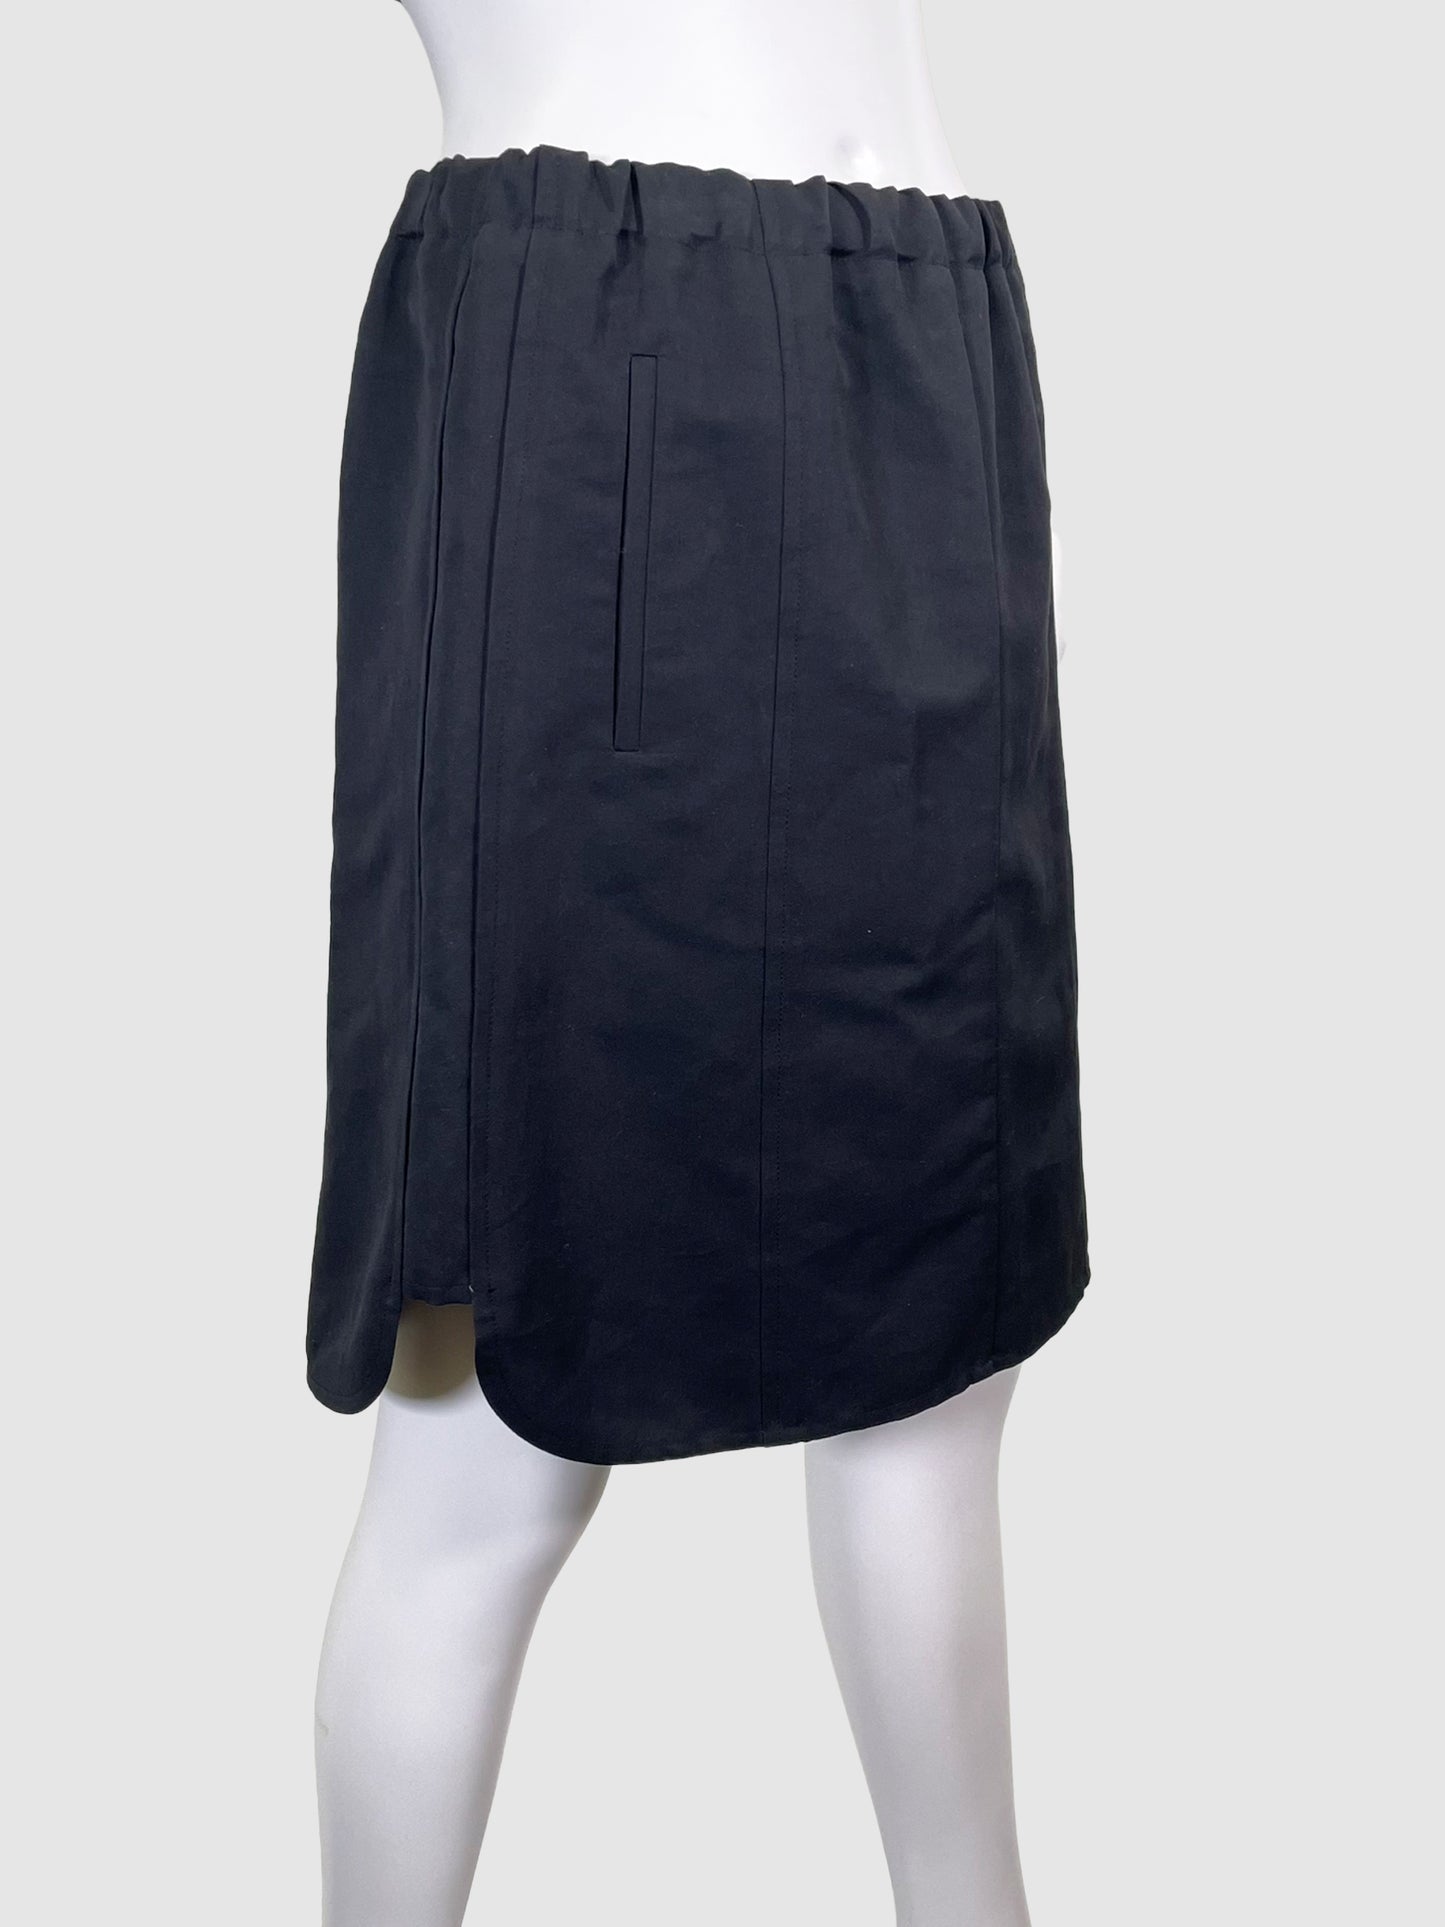 Marni A-Line Mini Skirt - Size 40